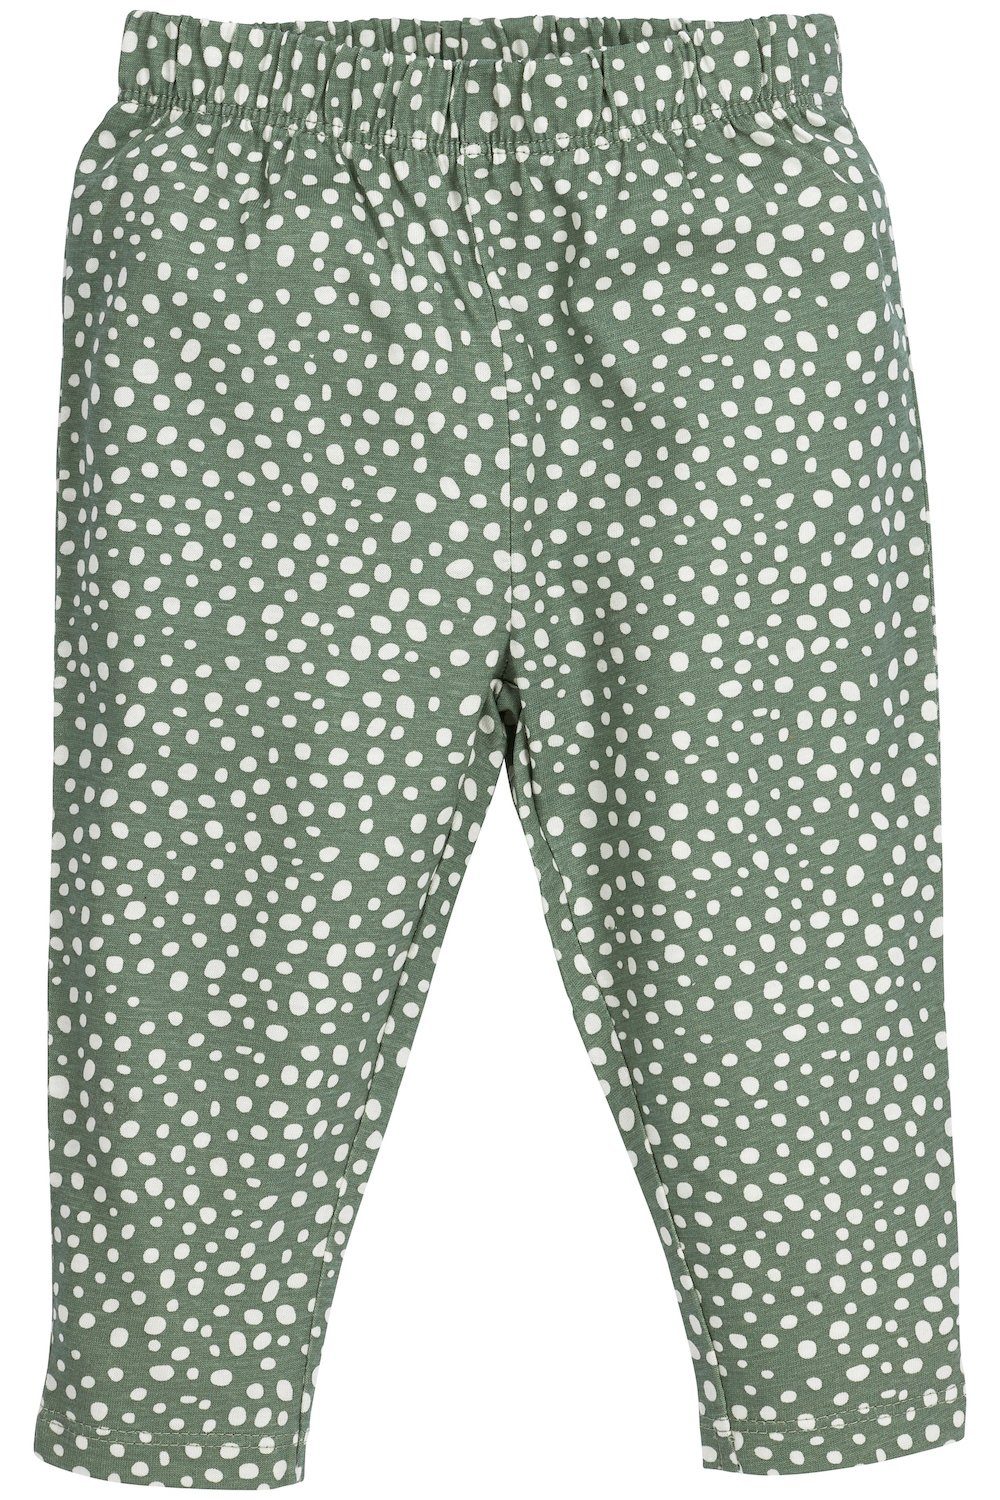 Meyco 62/68 Baby Pyjama tlg) Green Cheetah Forest (2